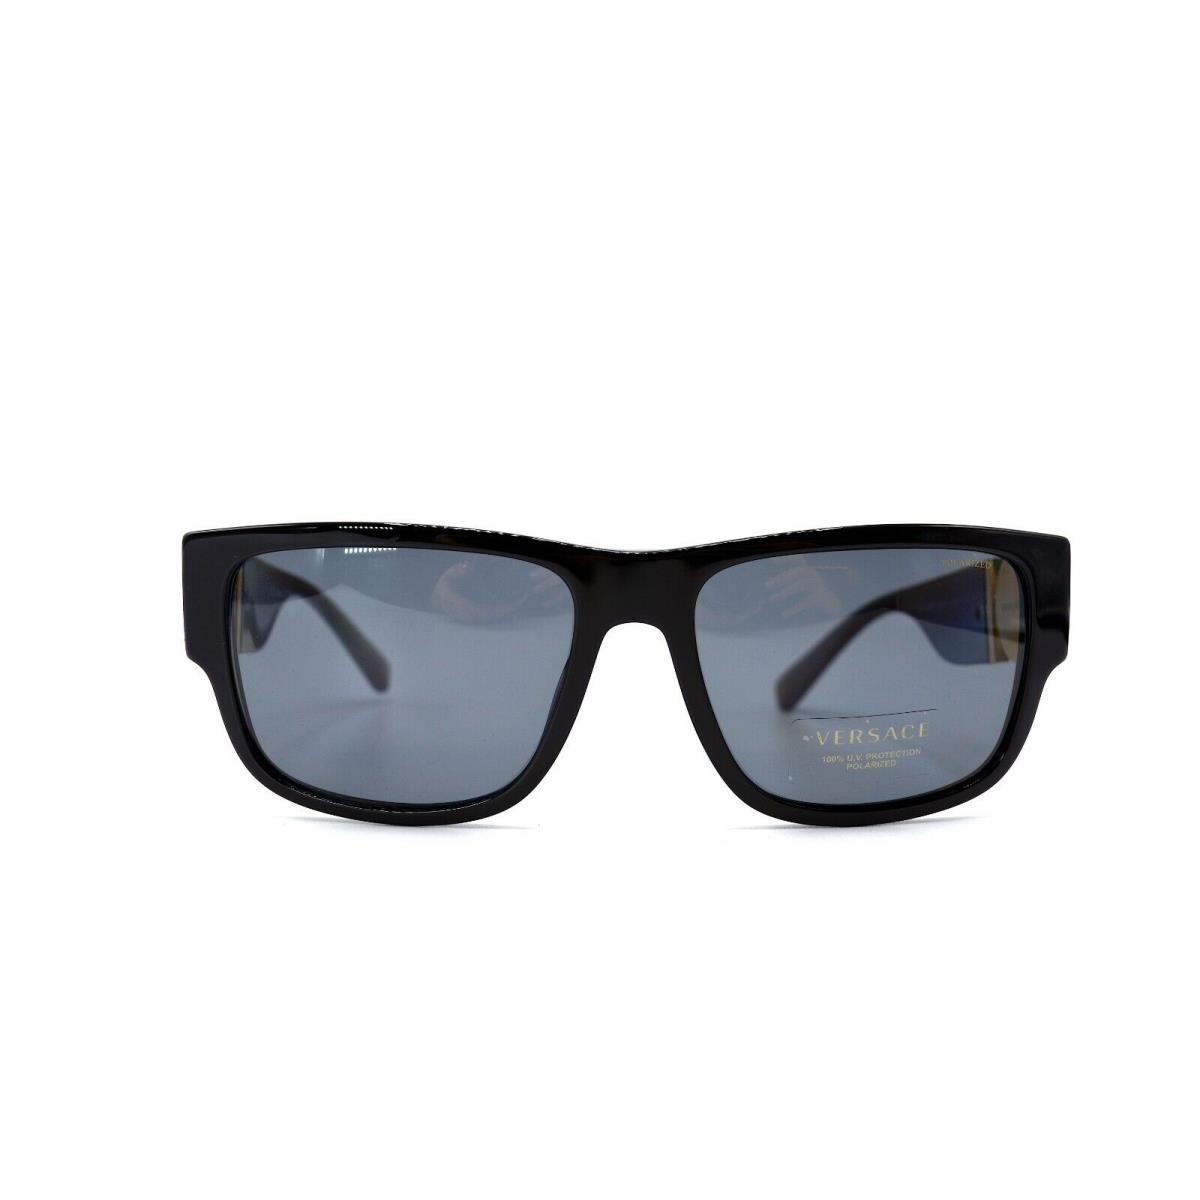 Versace sunglasses  - BLACK Frame, Gray Lens 1